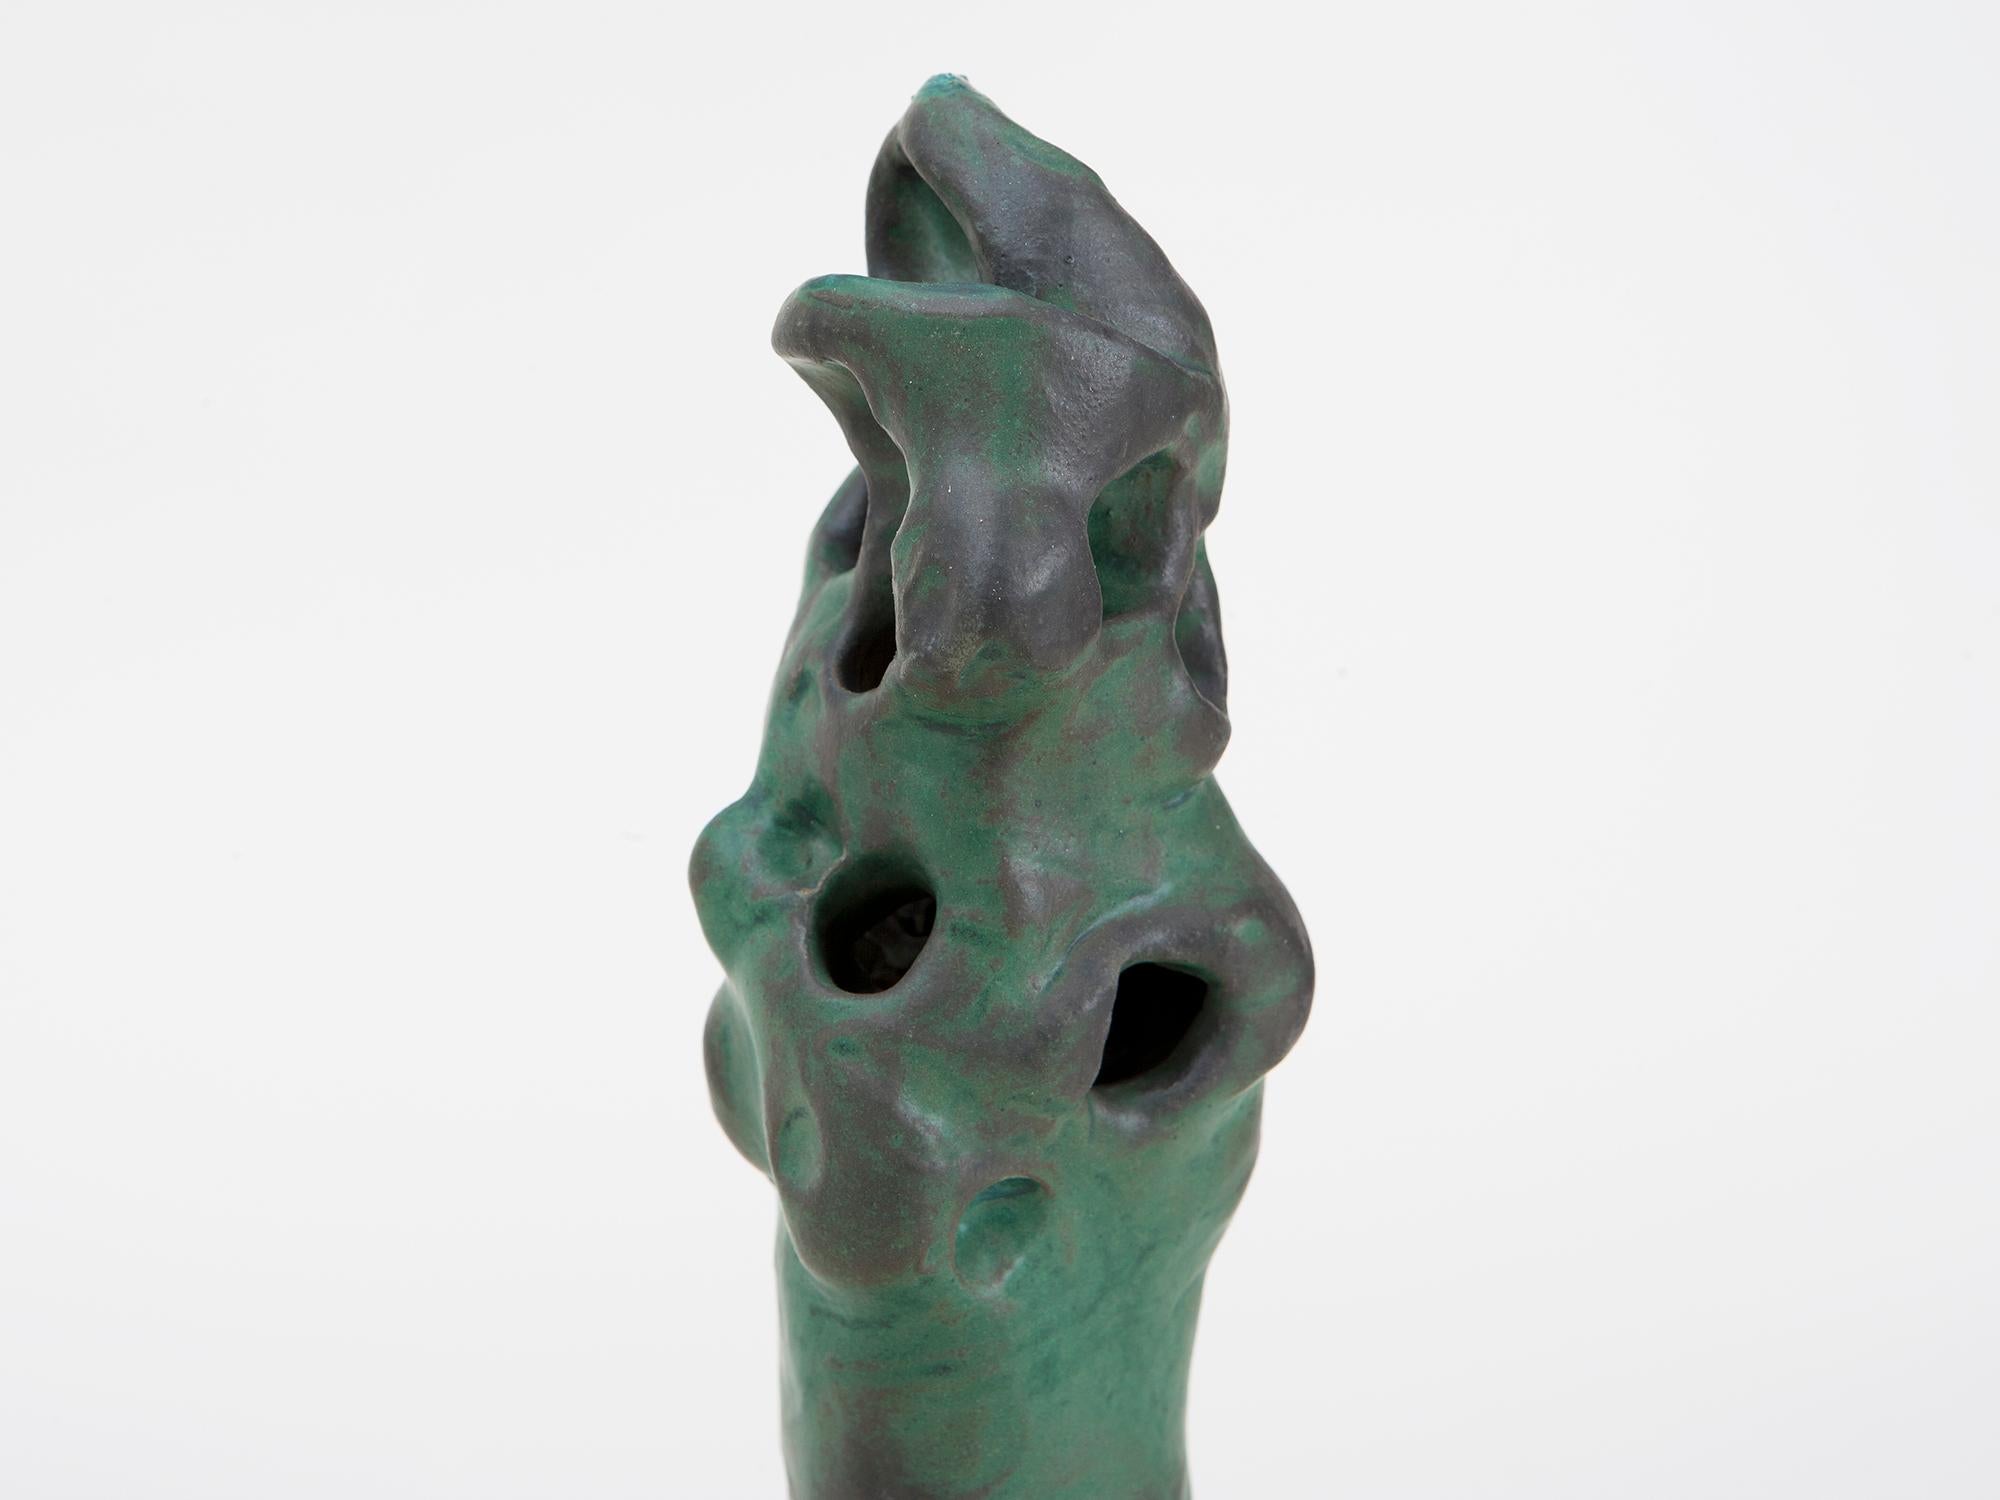 Modernist clay sculpture with organic green glaze by artist Judy Engel of upstate New York.